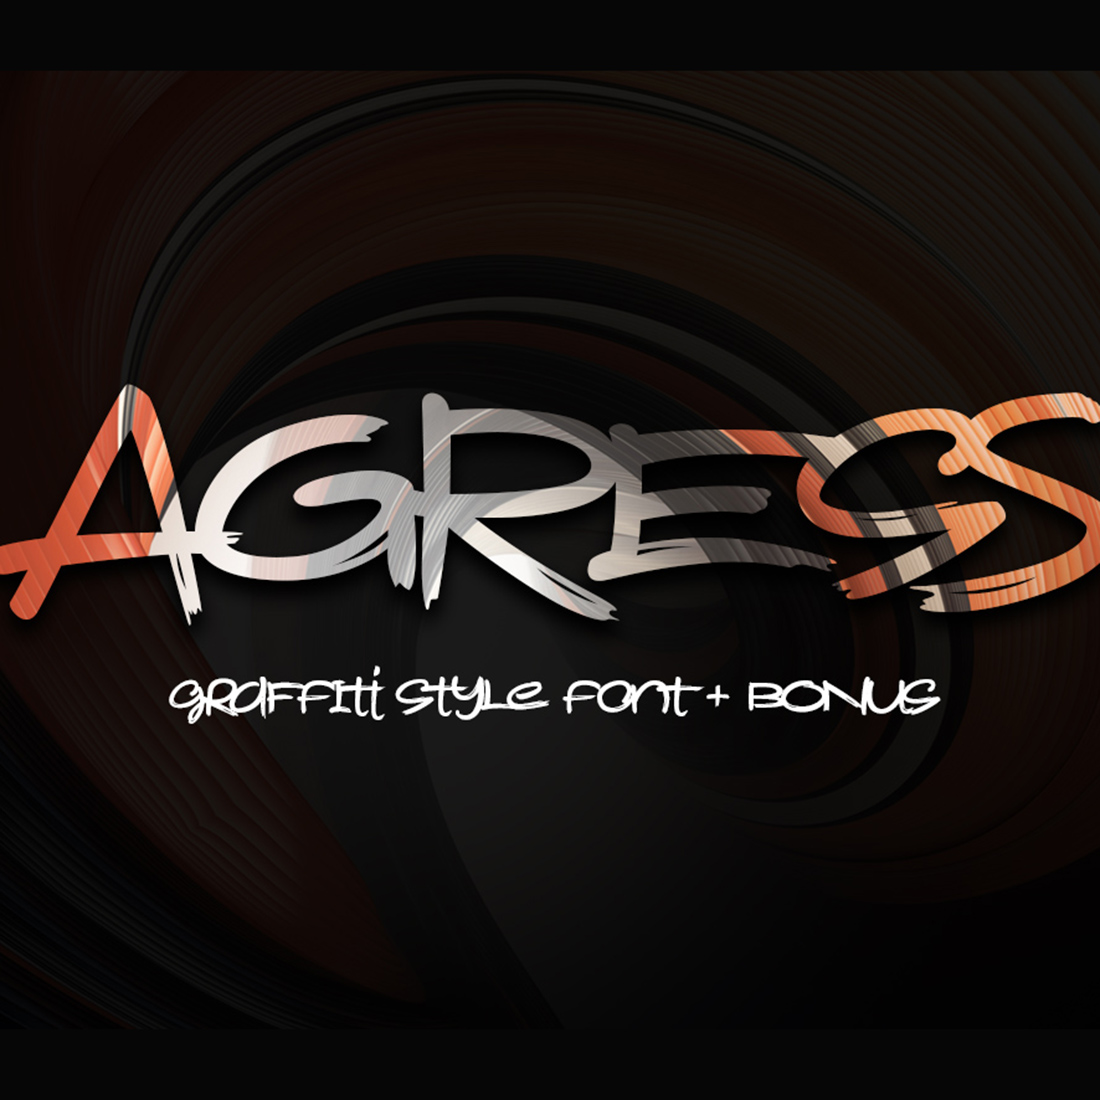 Script Graffiti Agress Font cover image.